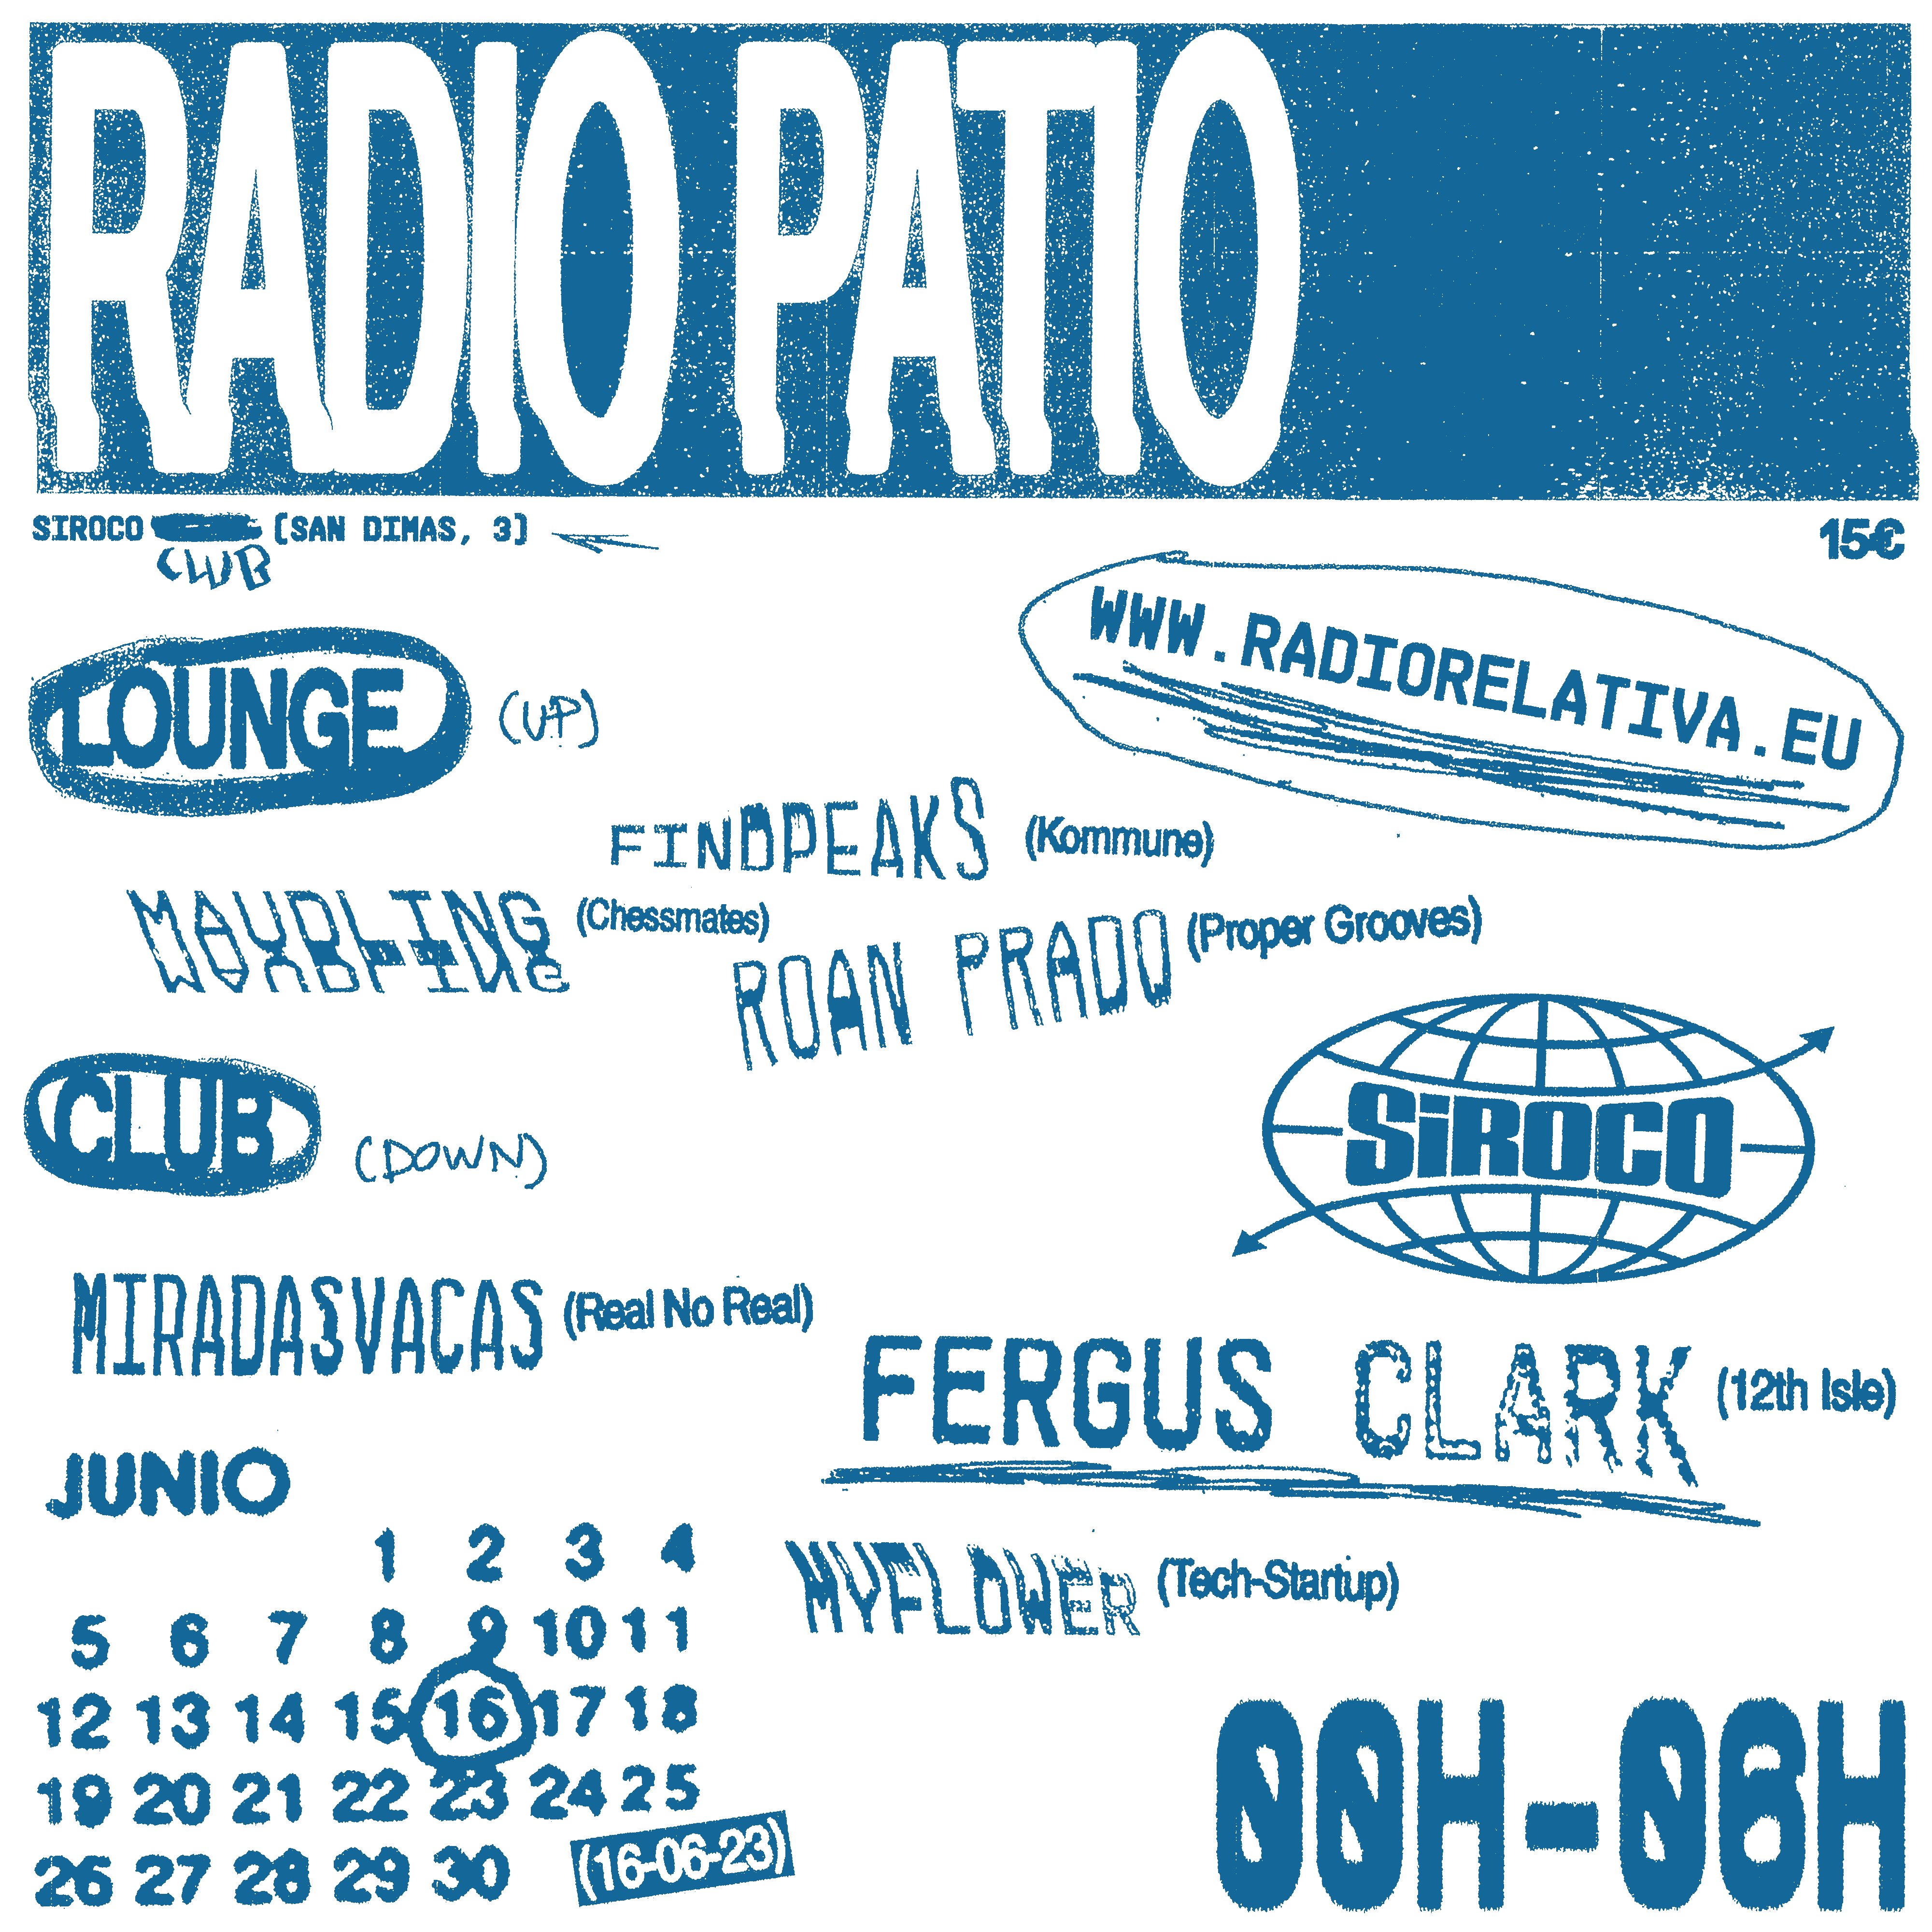 Radio Patio: Miradasvacas (Real No Real, Ed. Fontenebro)  + Fergus Clark (12th Isle) + Myflower (Tech Startup)